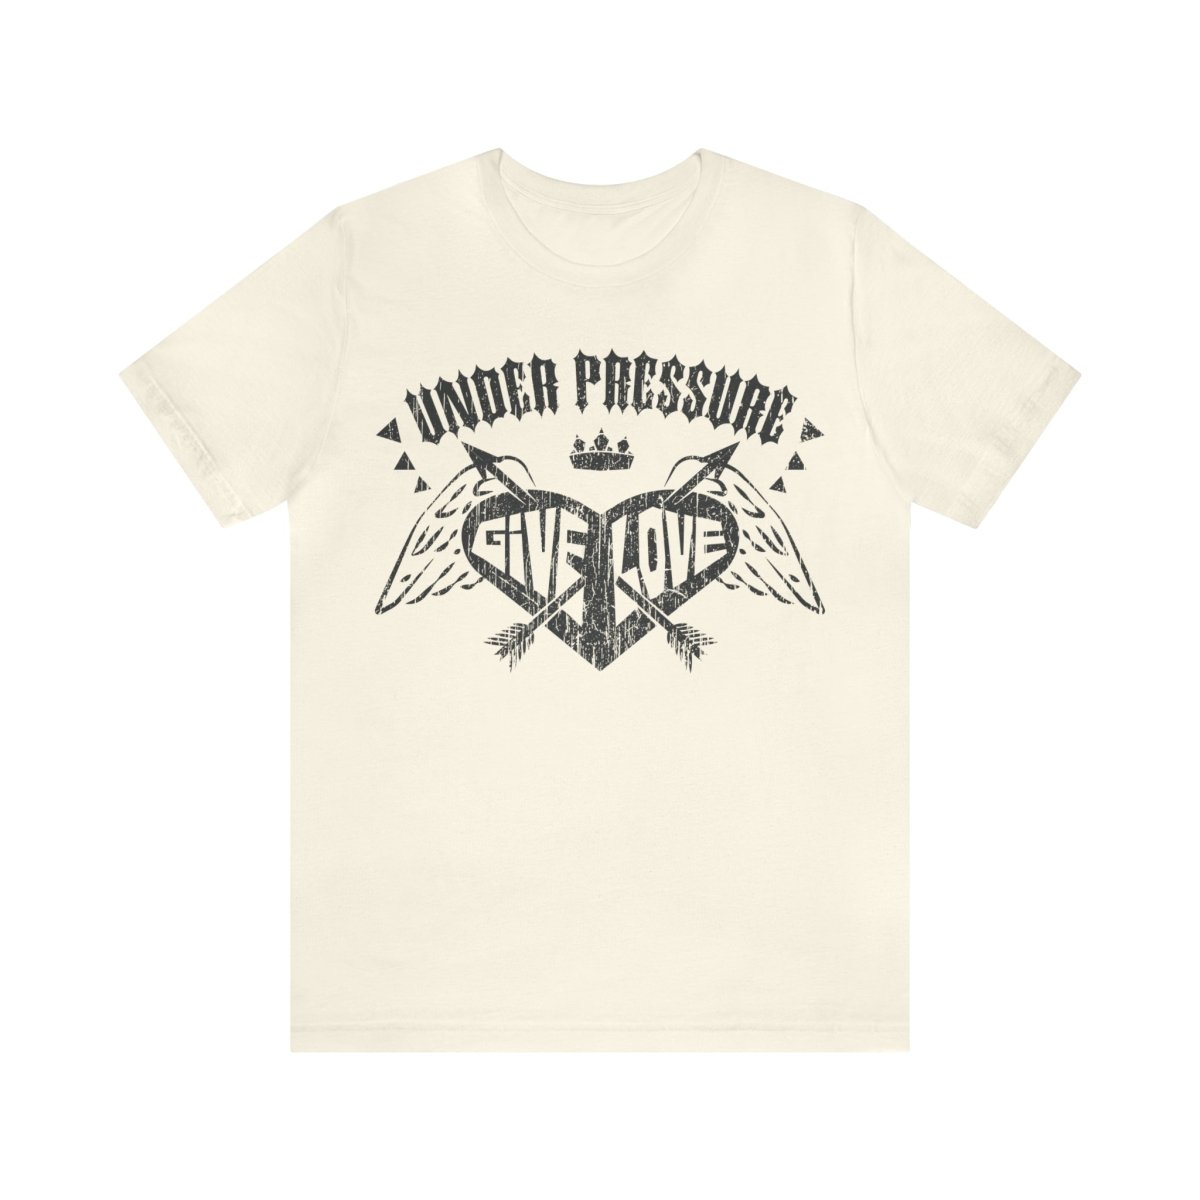 Give Love Premium T-Shirt, Under Pressure